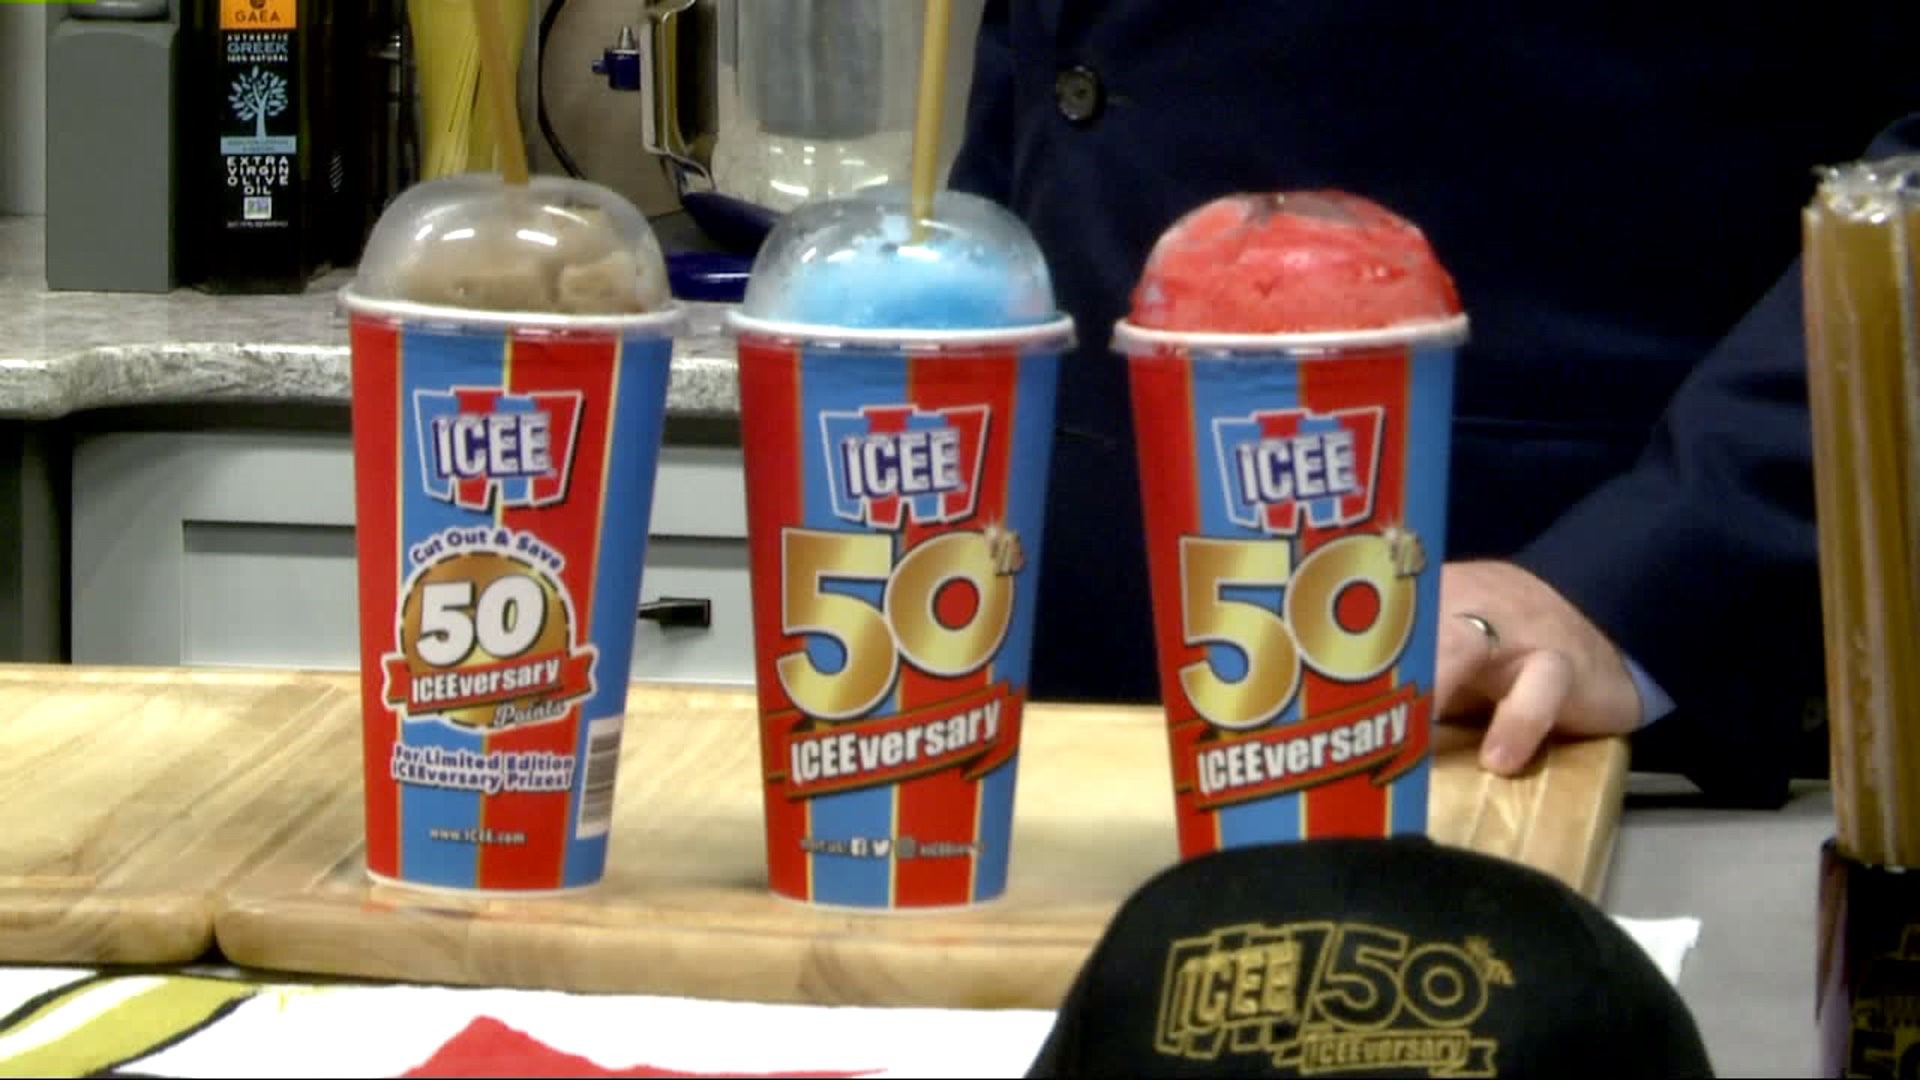 ICEE celebrates its 50th Anniversary